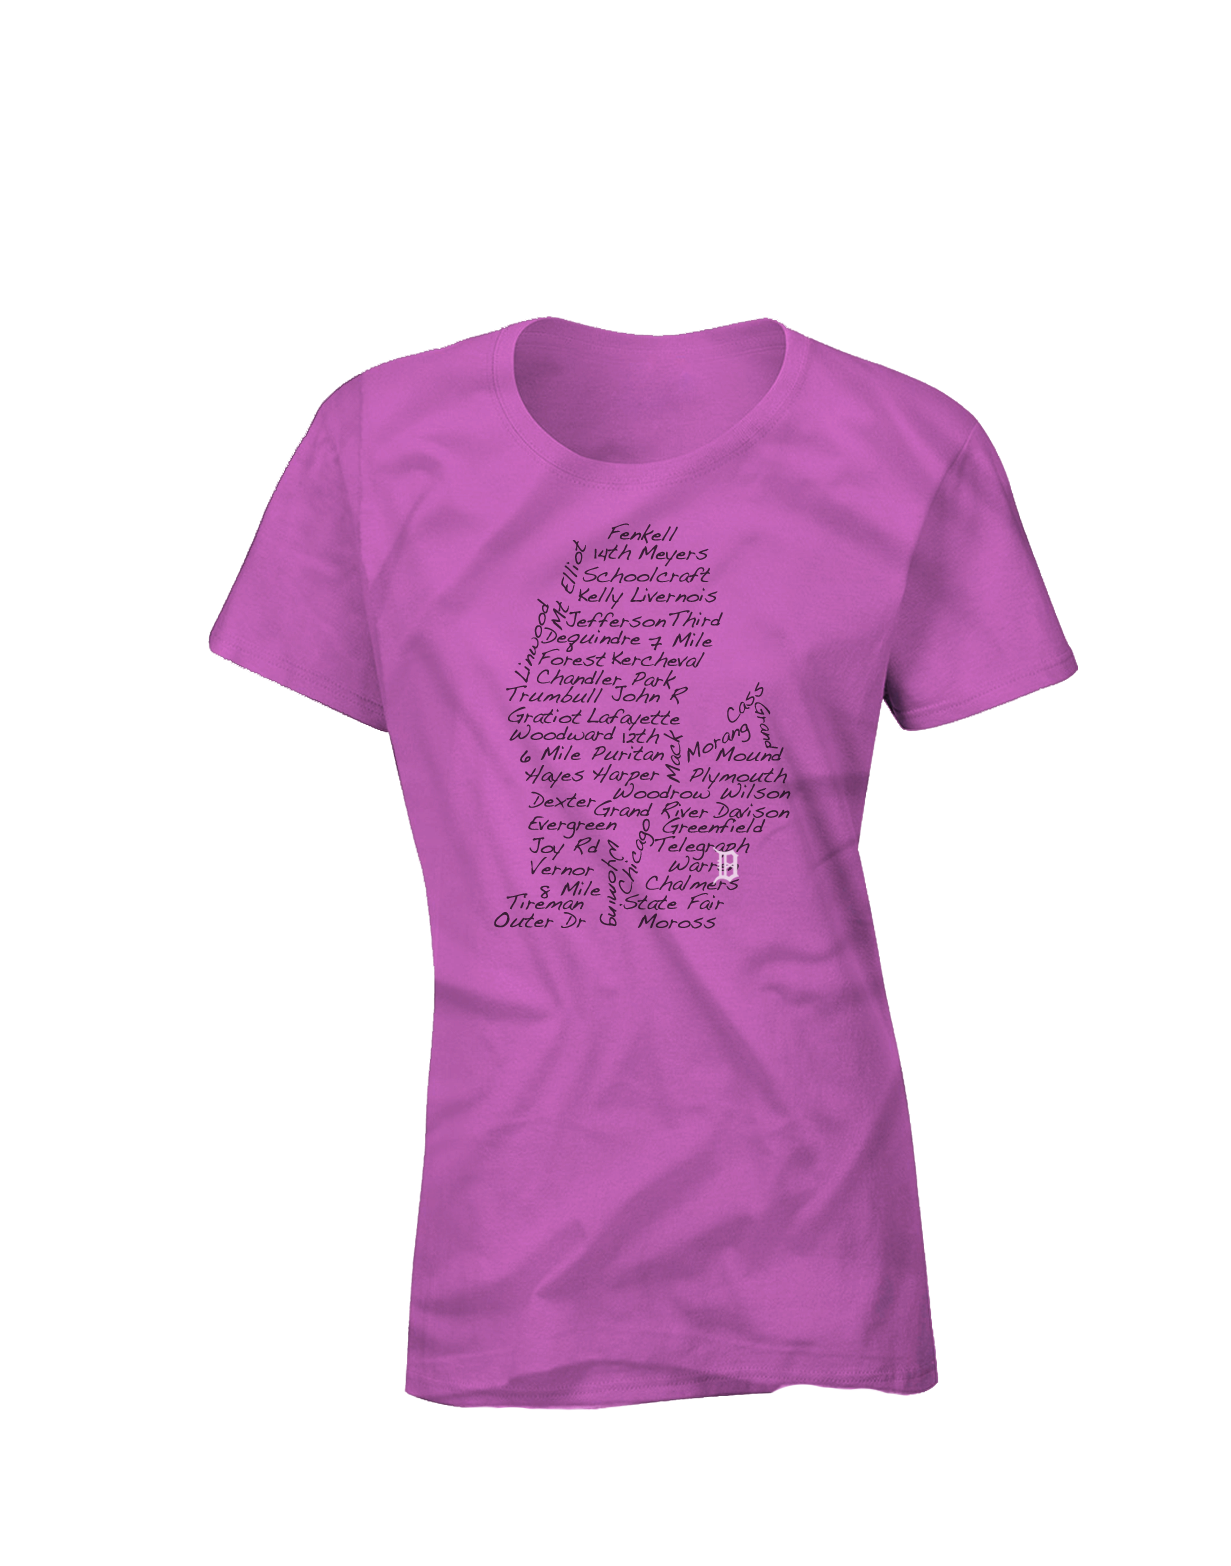 Streets of Detroit Short Sleeve Women's T-shirt